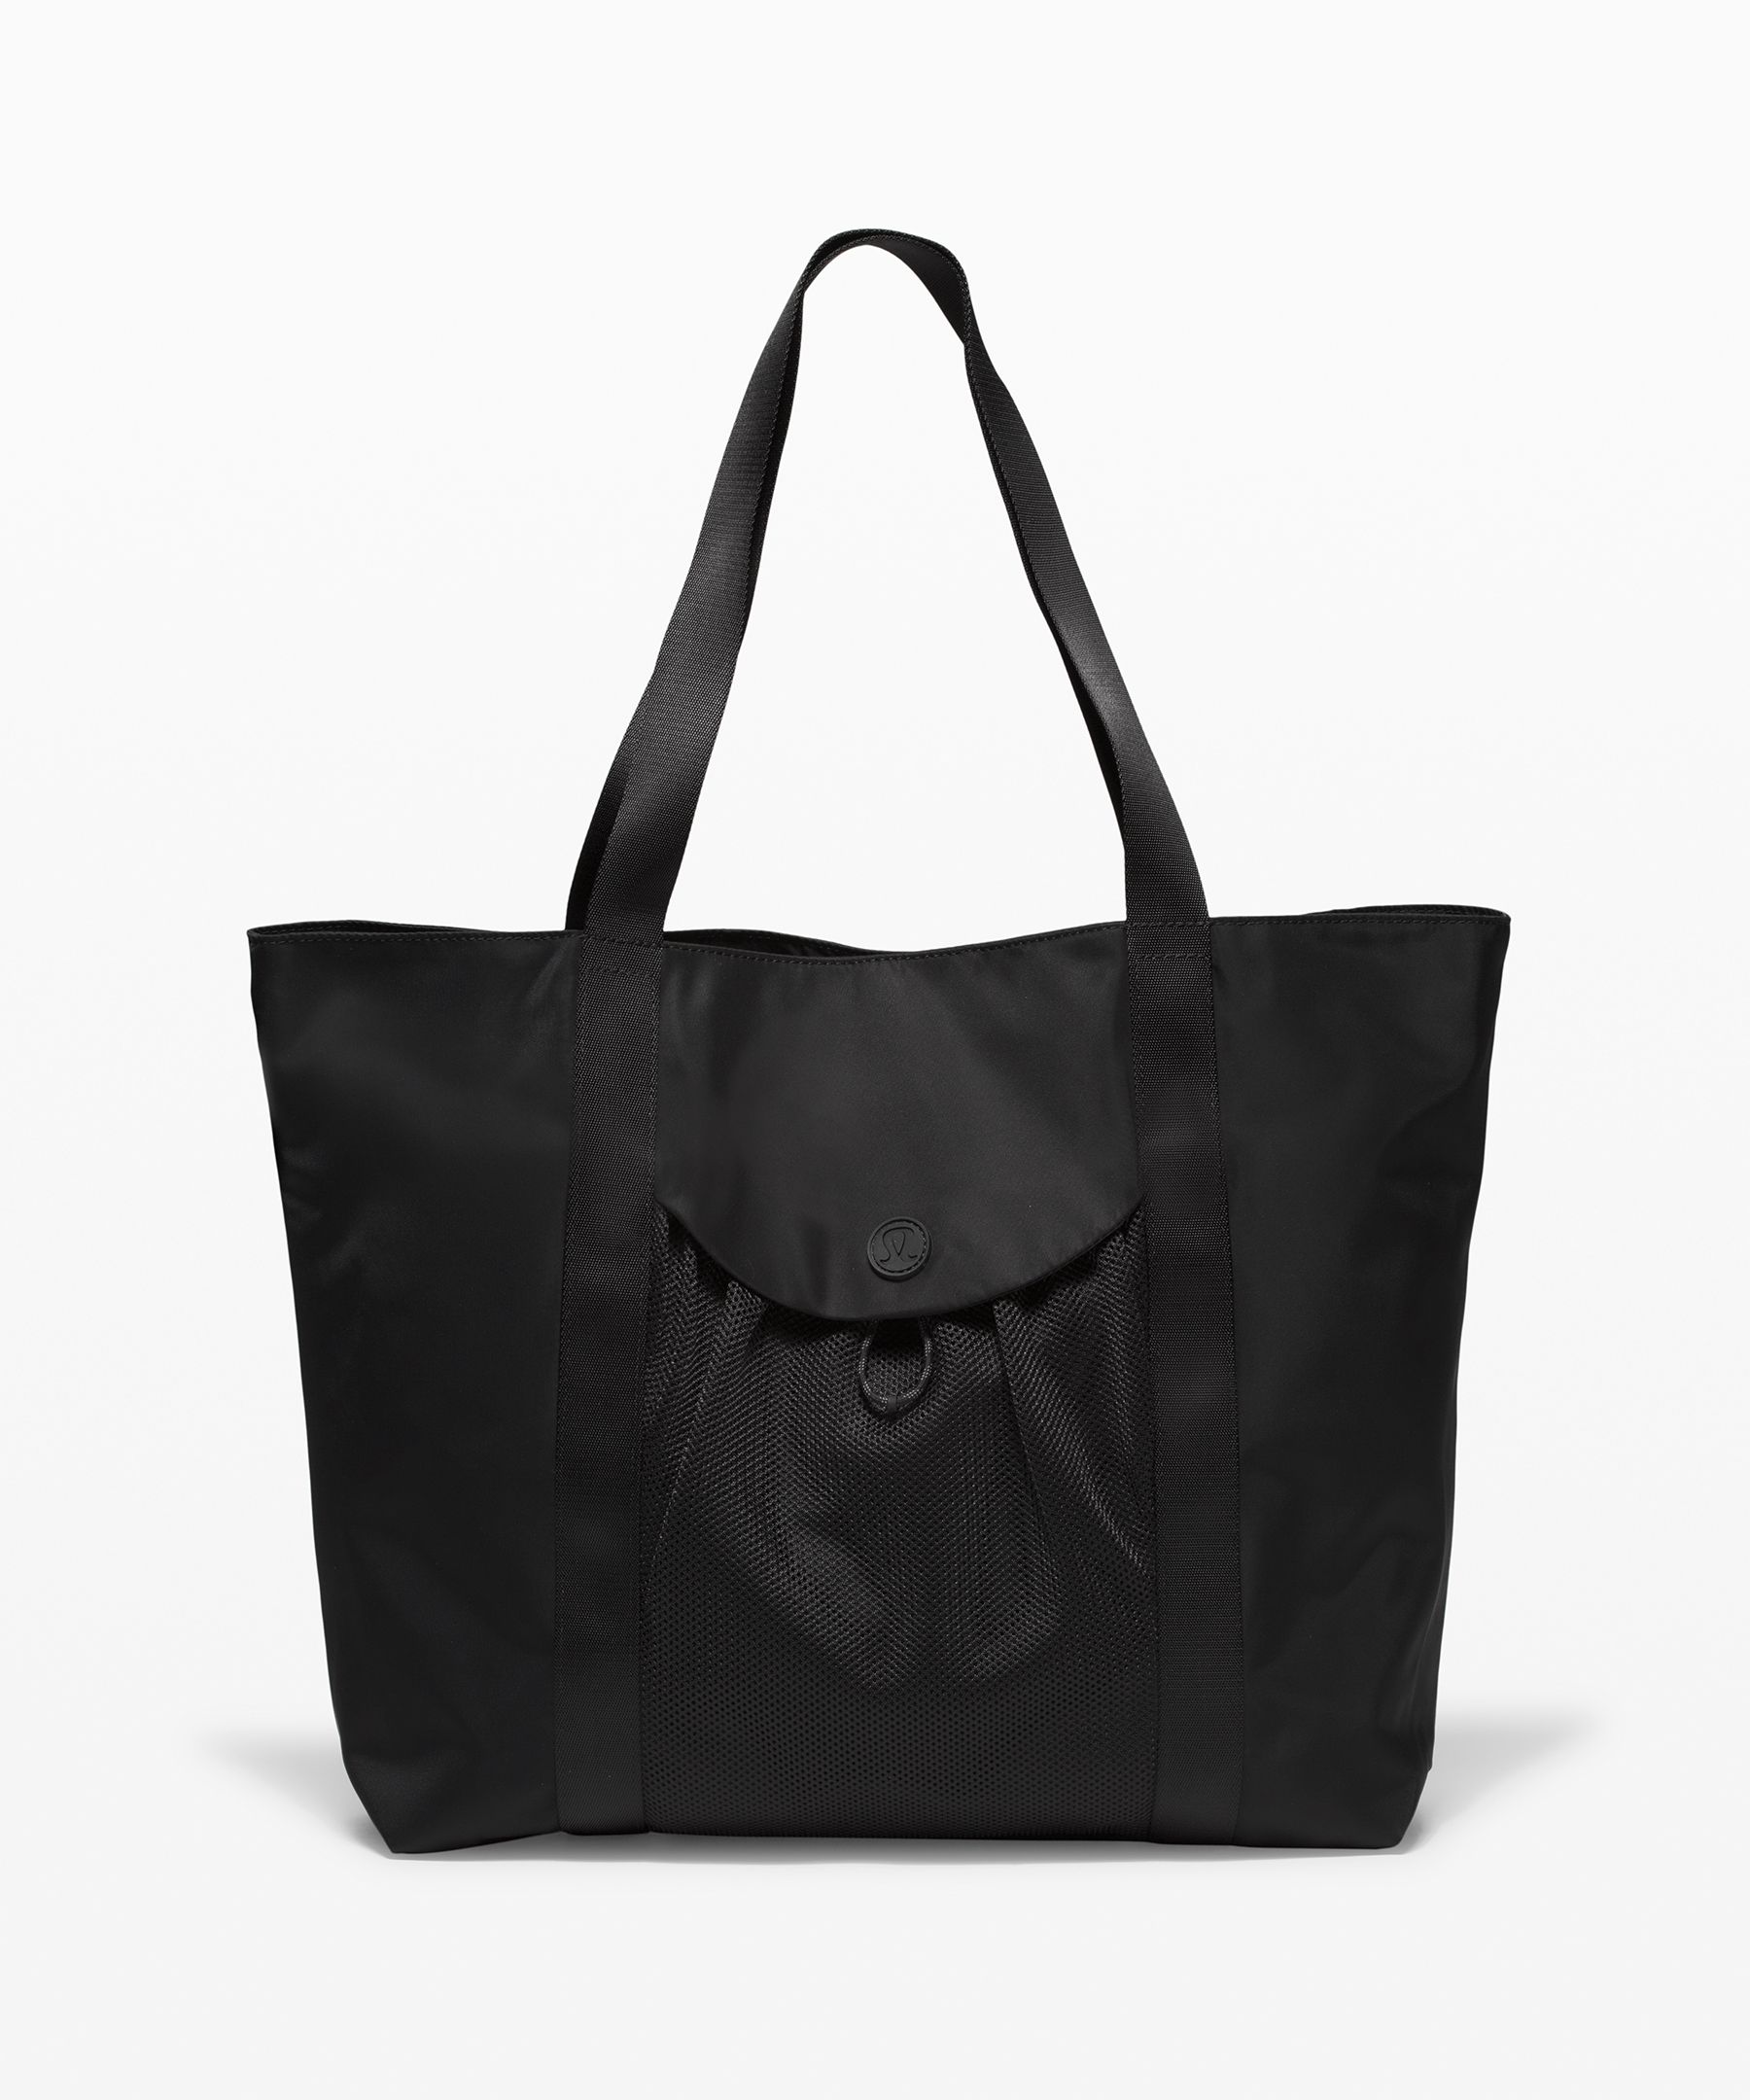 Lululemon Take It On Tote Bag 24l In Black